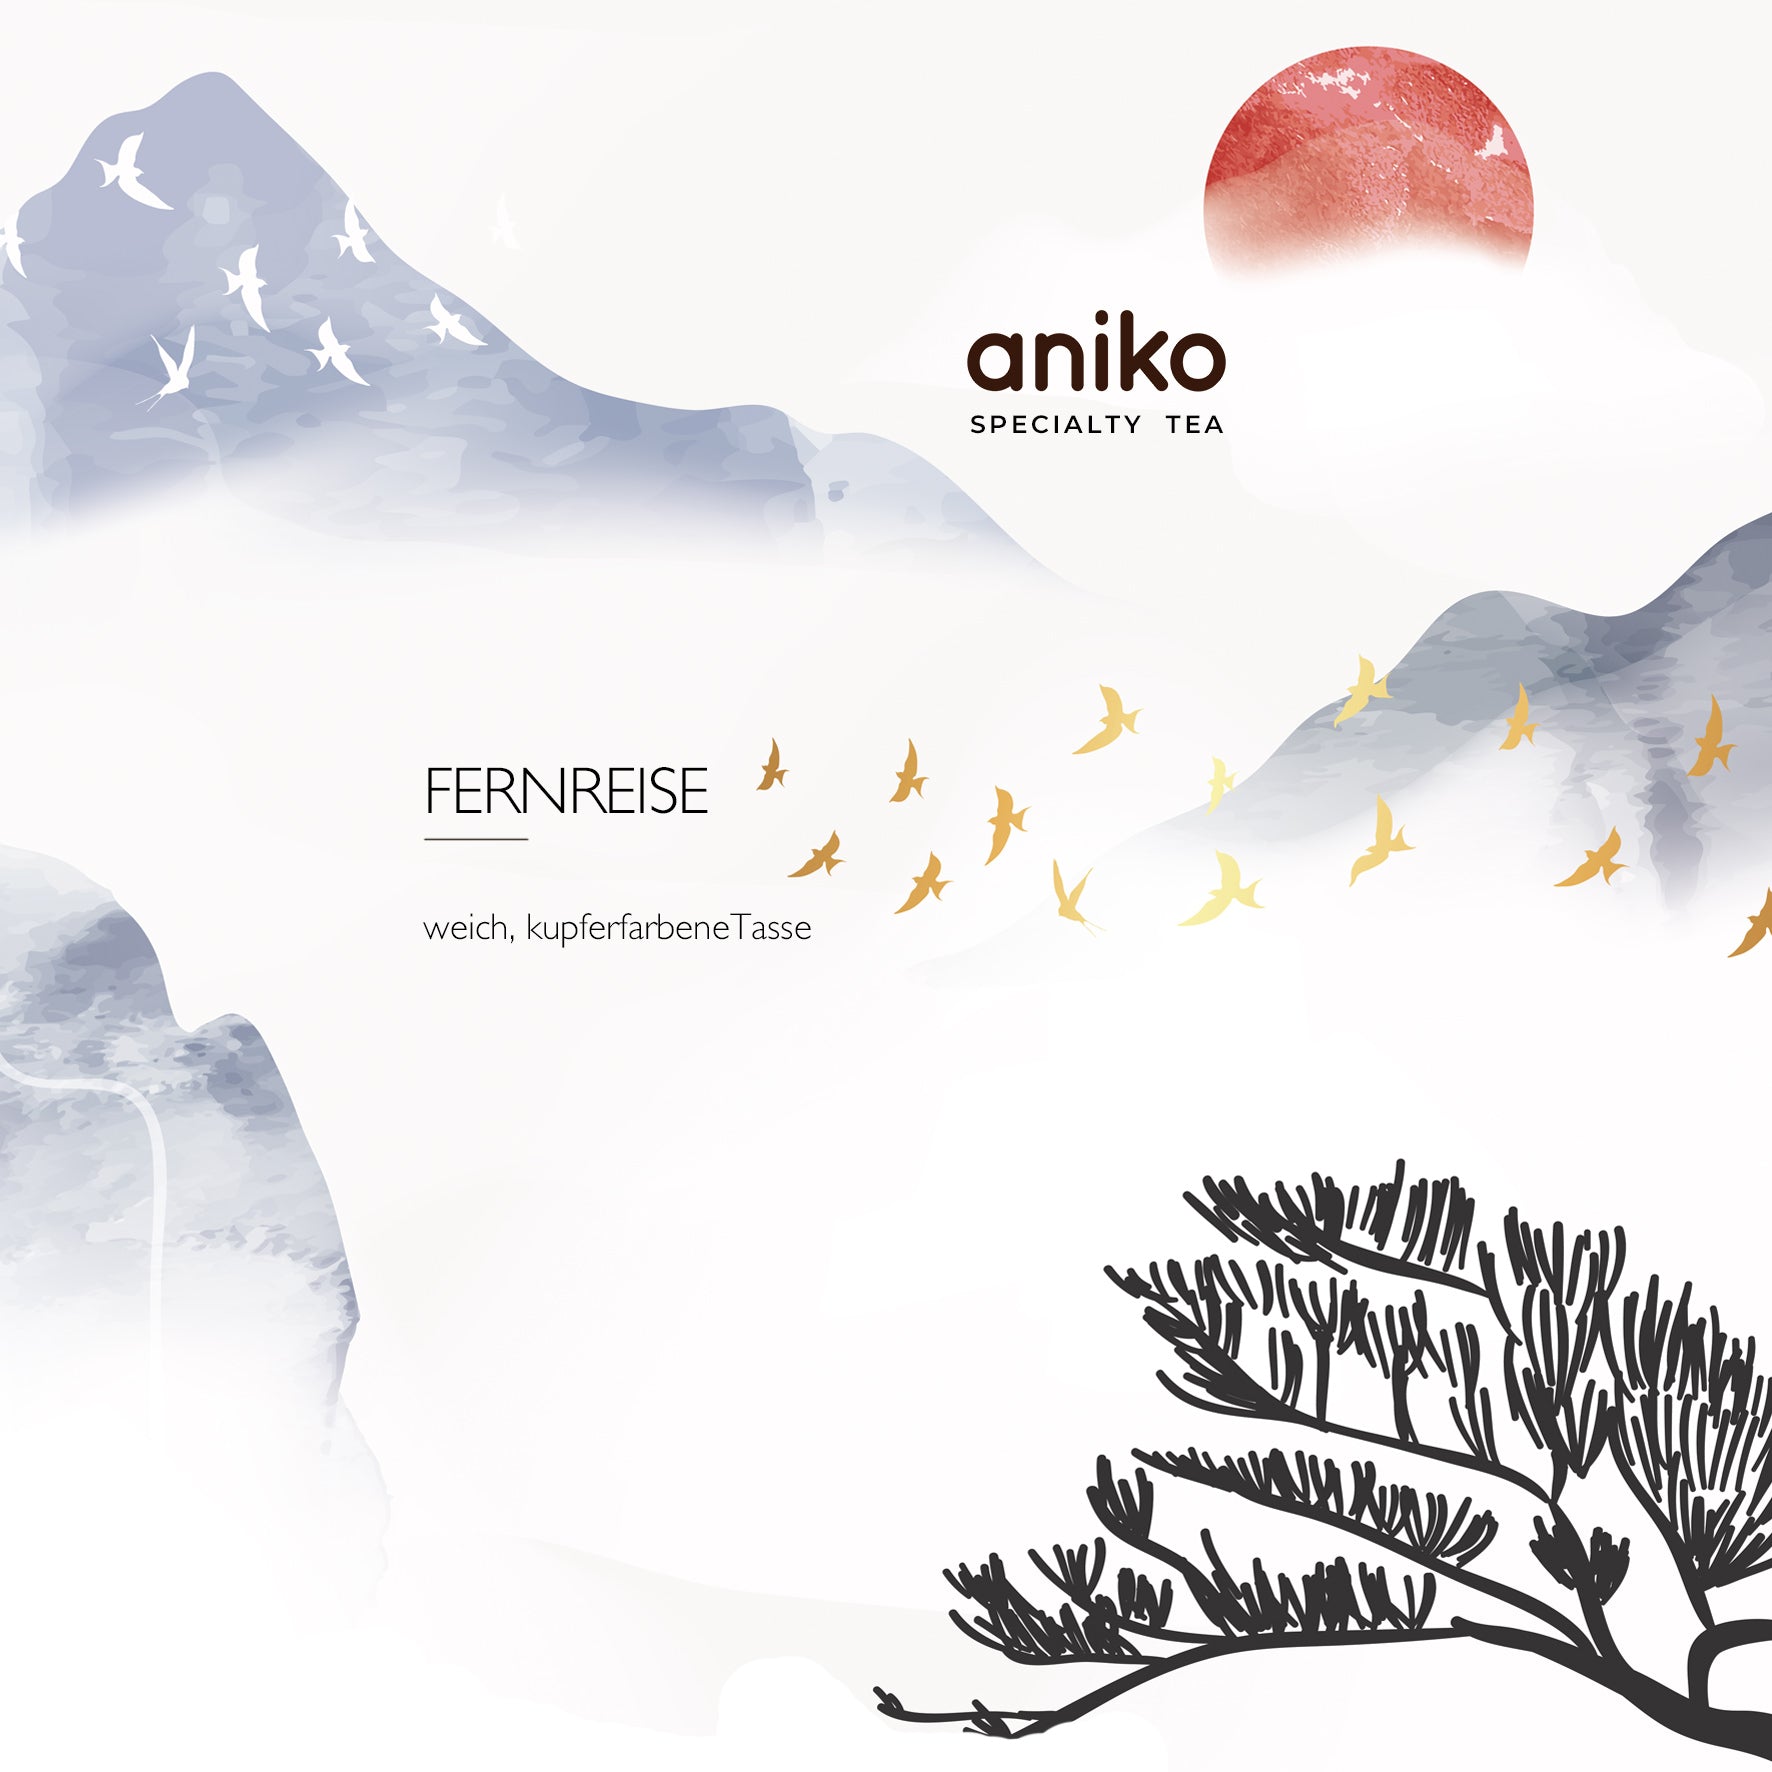 aniko Specialty Tea I long-distance travel